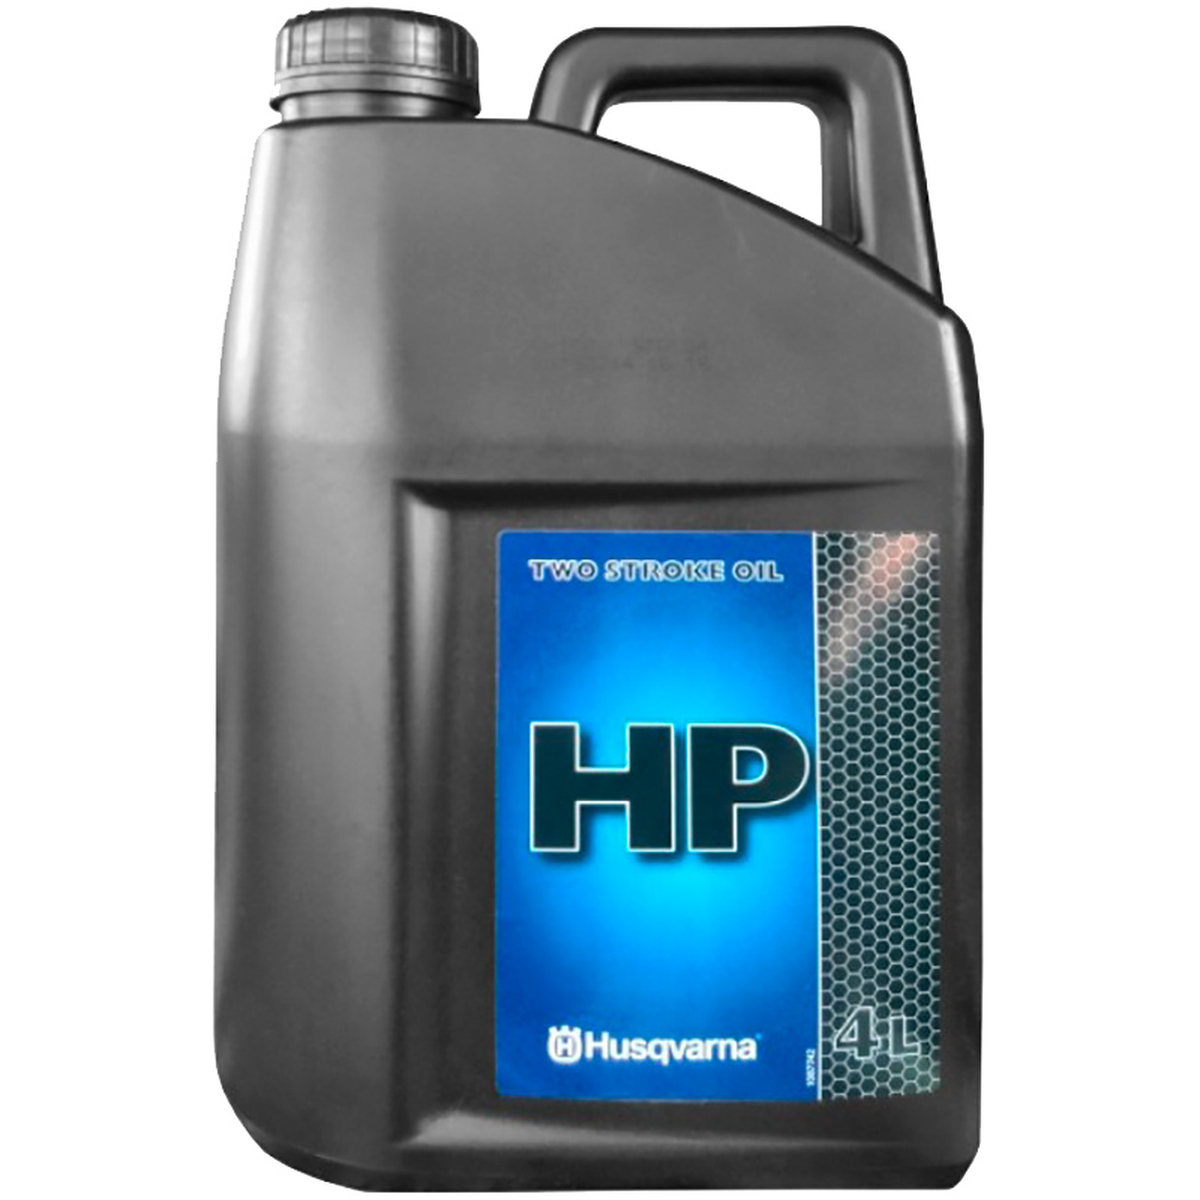  Husqvarna HP 2-х тактное 4л   по низкой цене - фото .